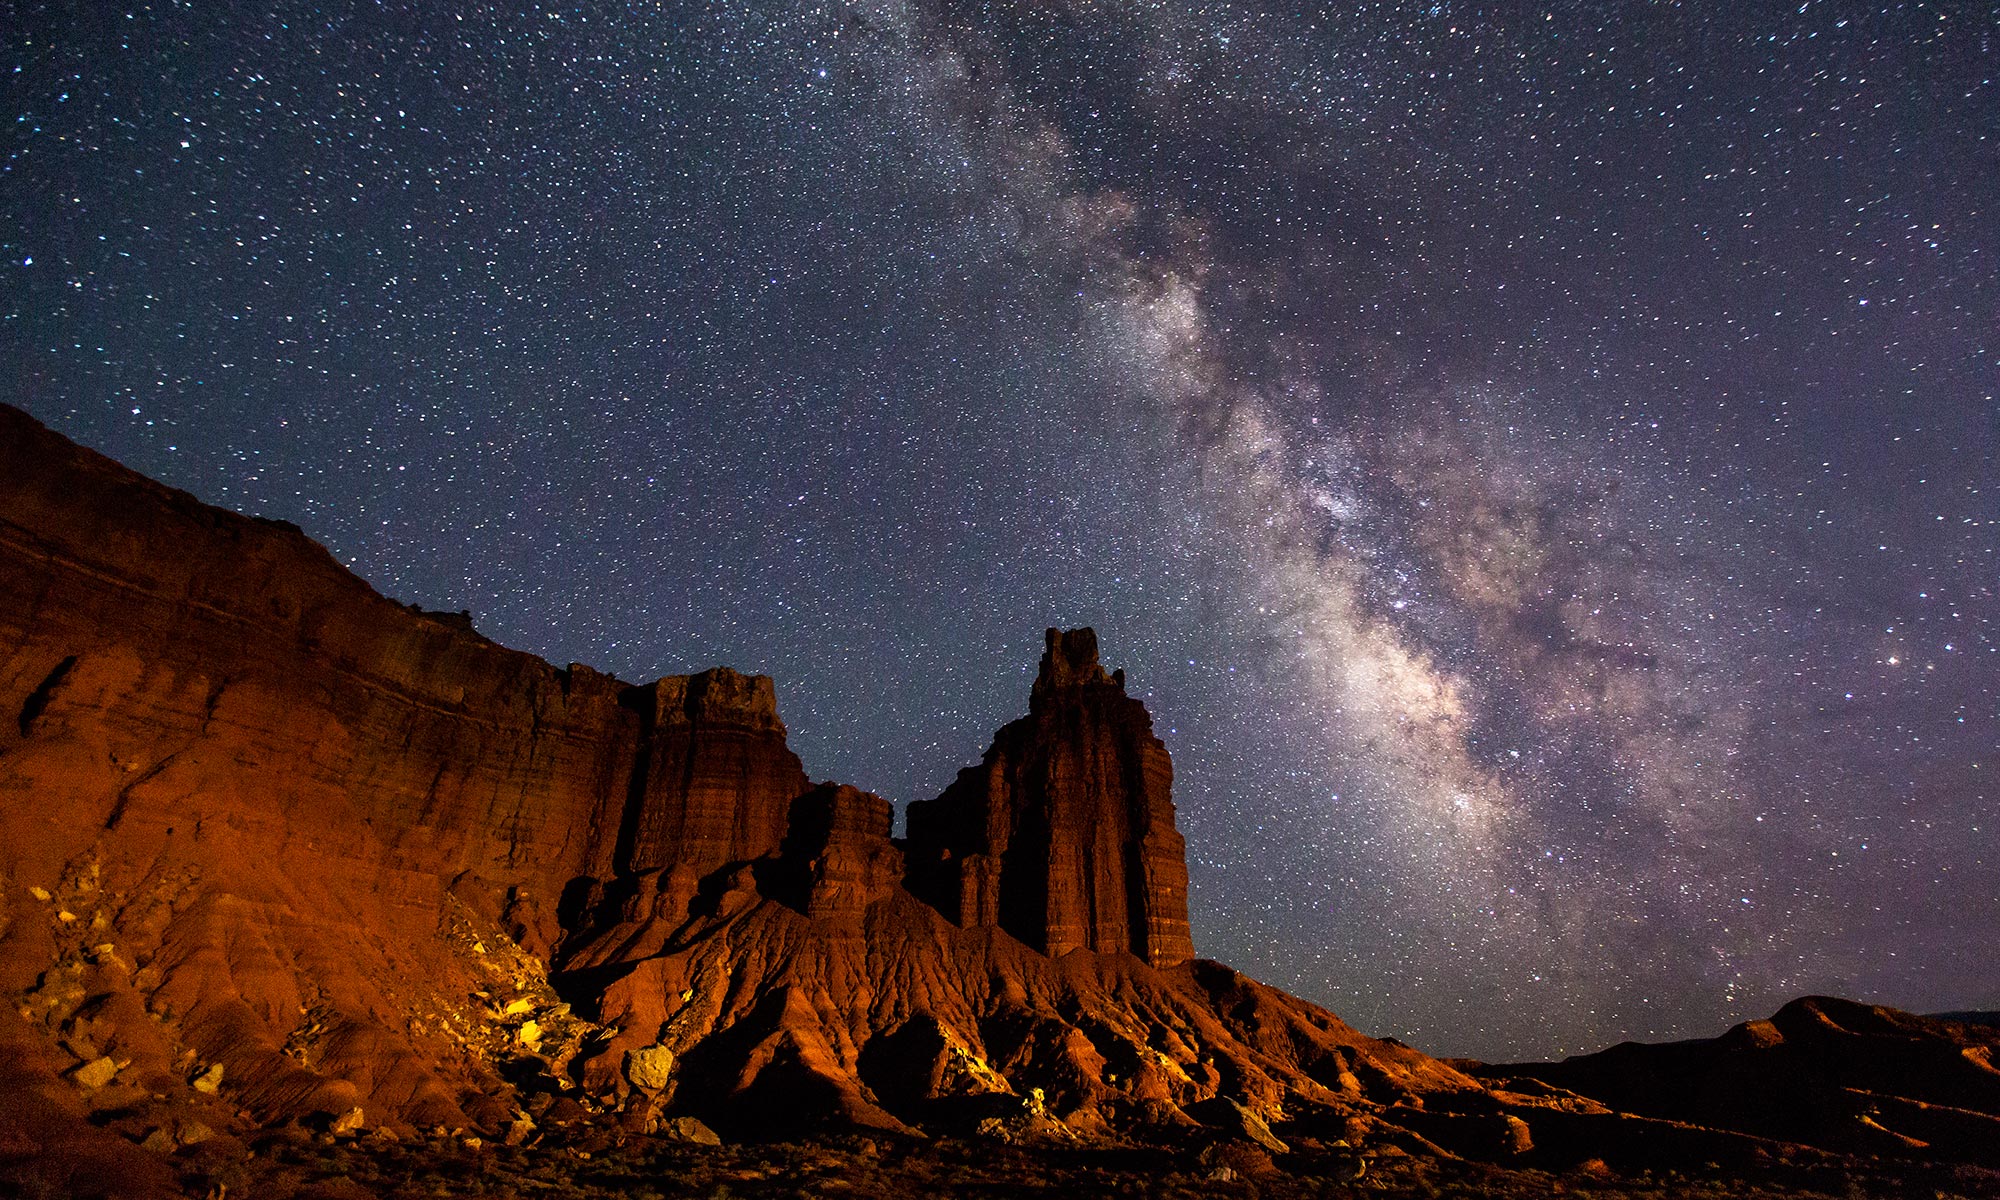 Milky Way over Chimney Rock | NPS Photo by Jacob W. Frank